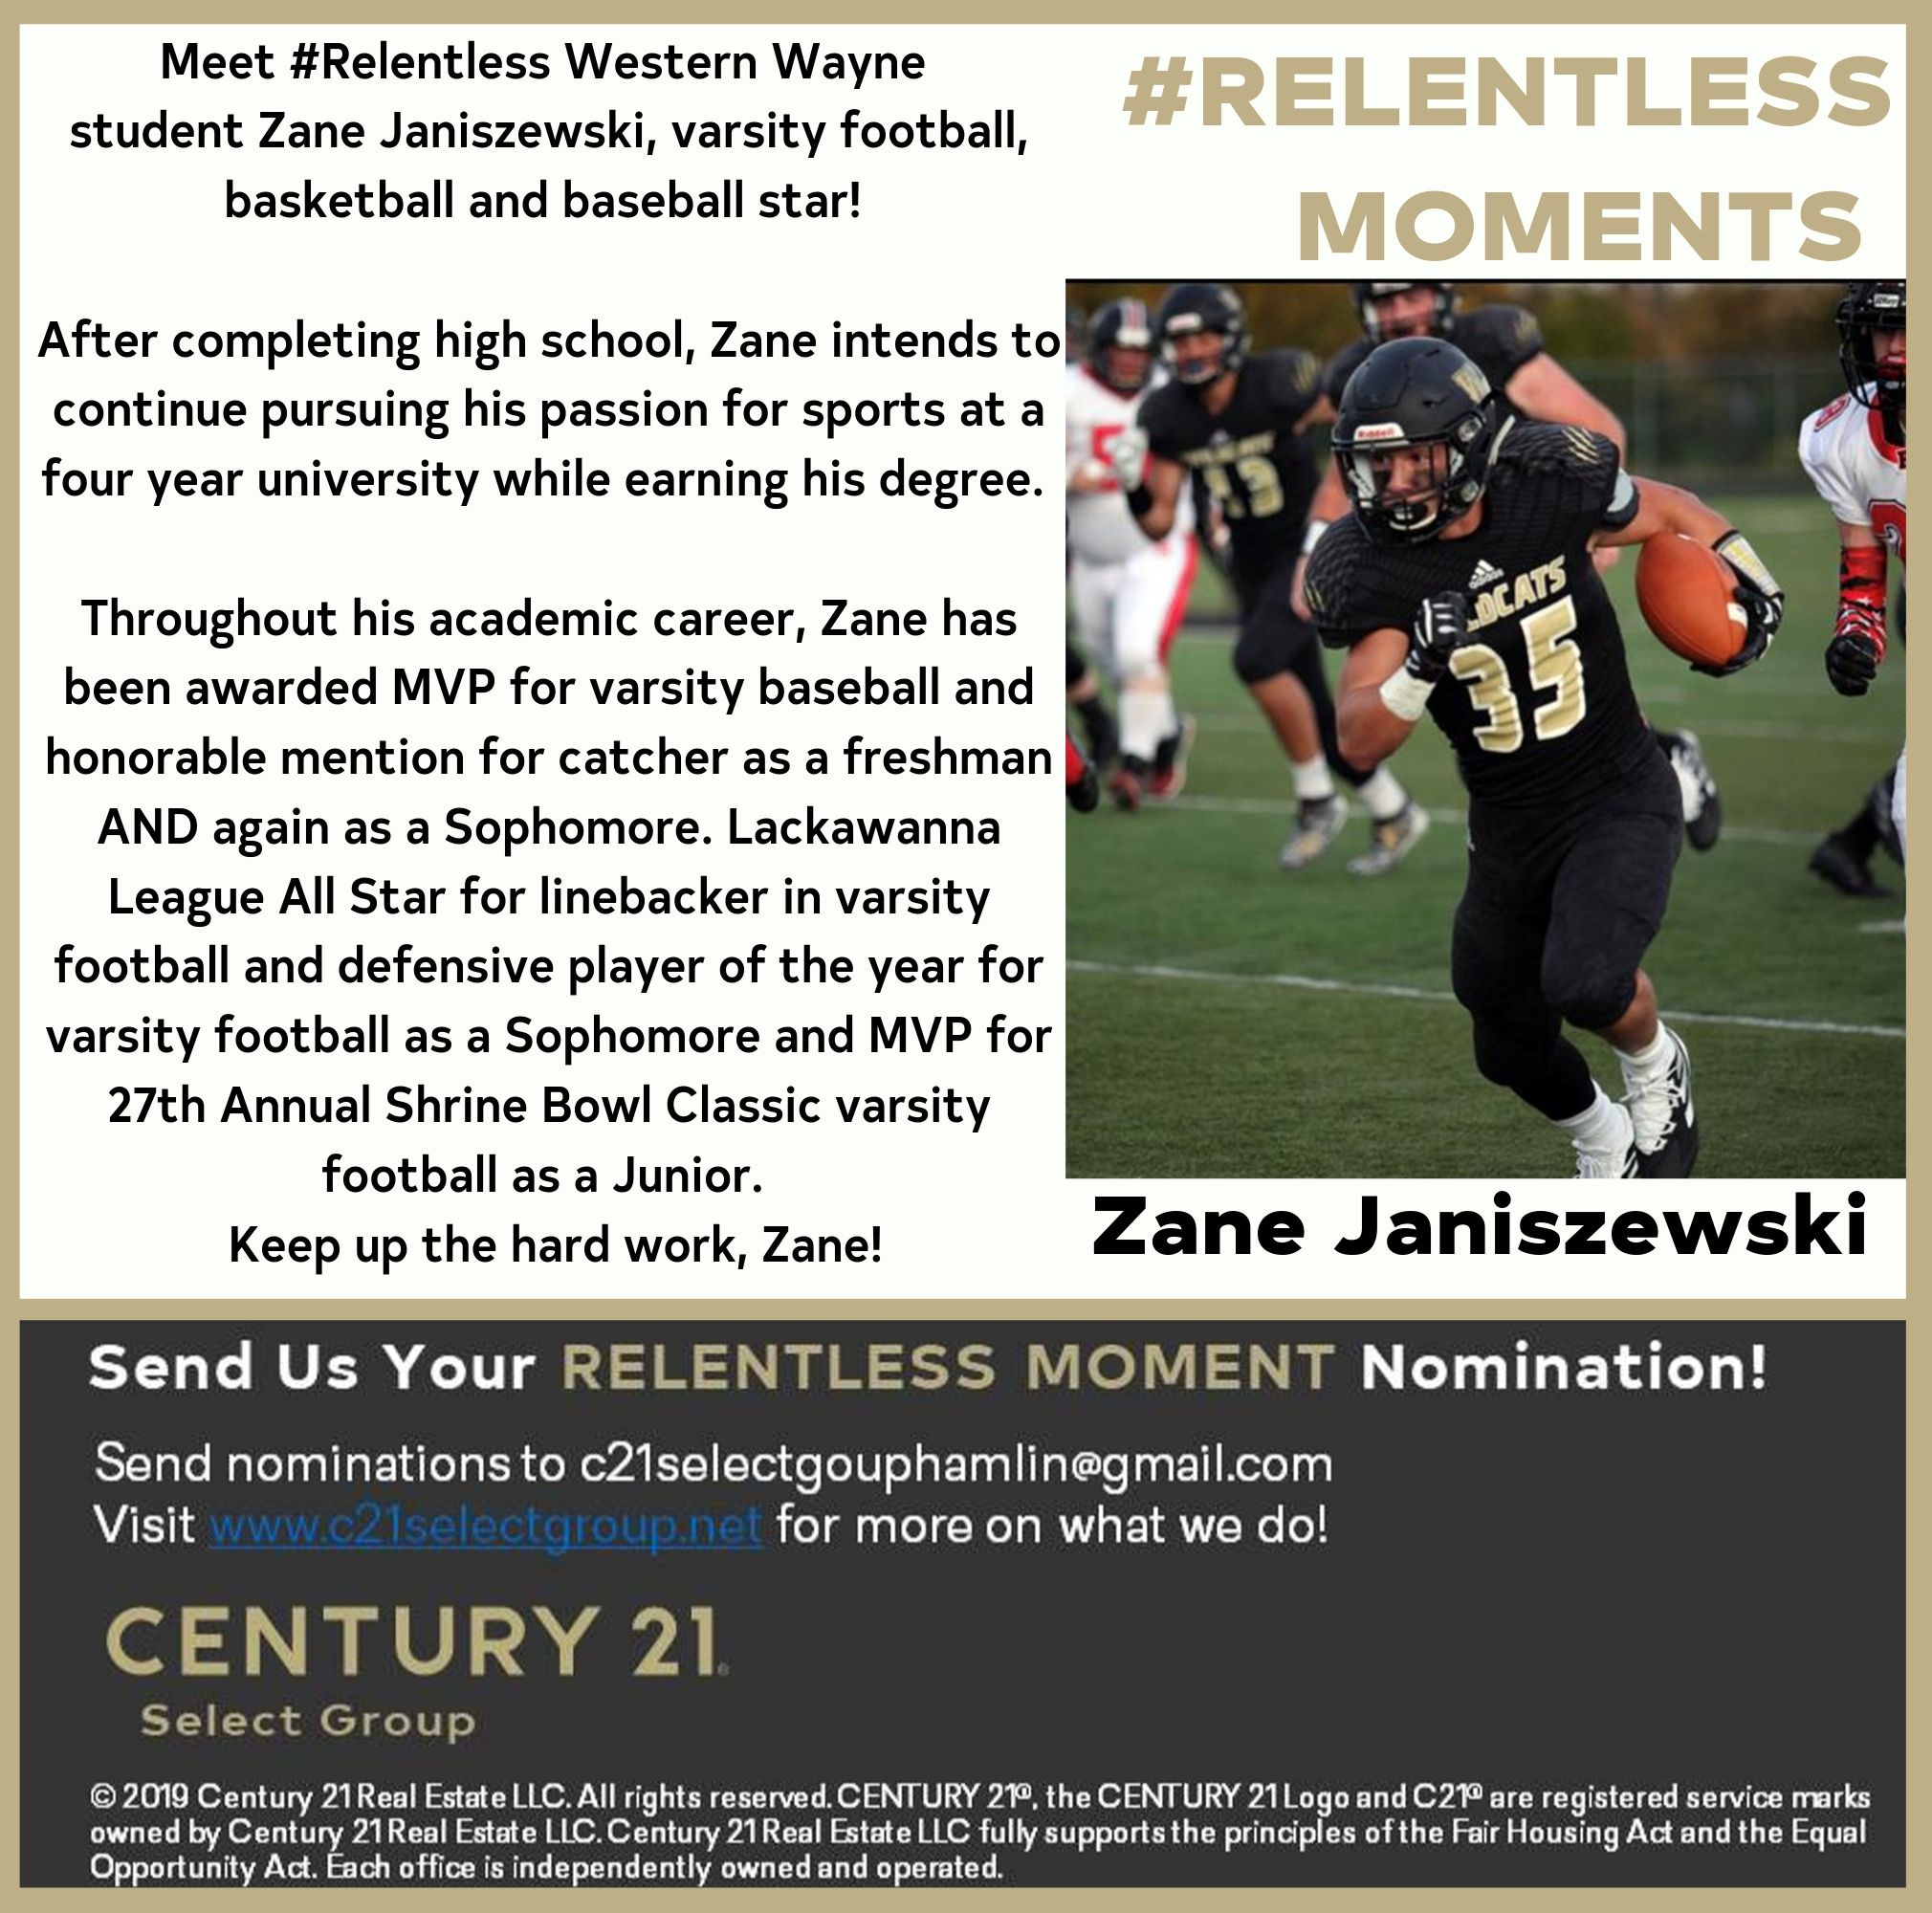 #Relentless Moments: Zane Janiszewski